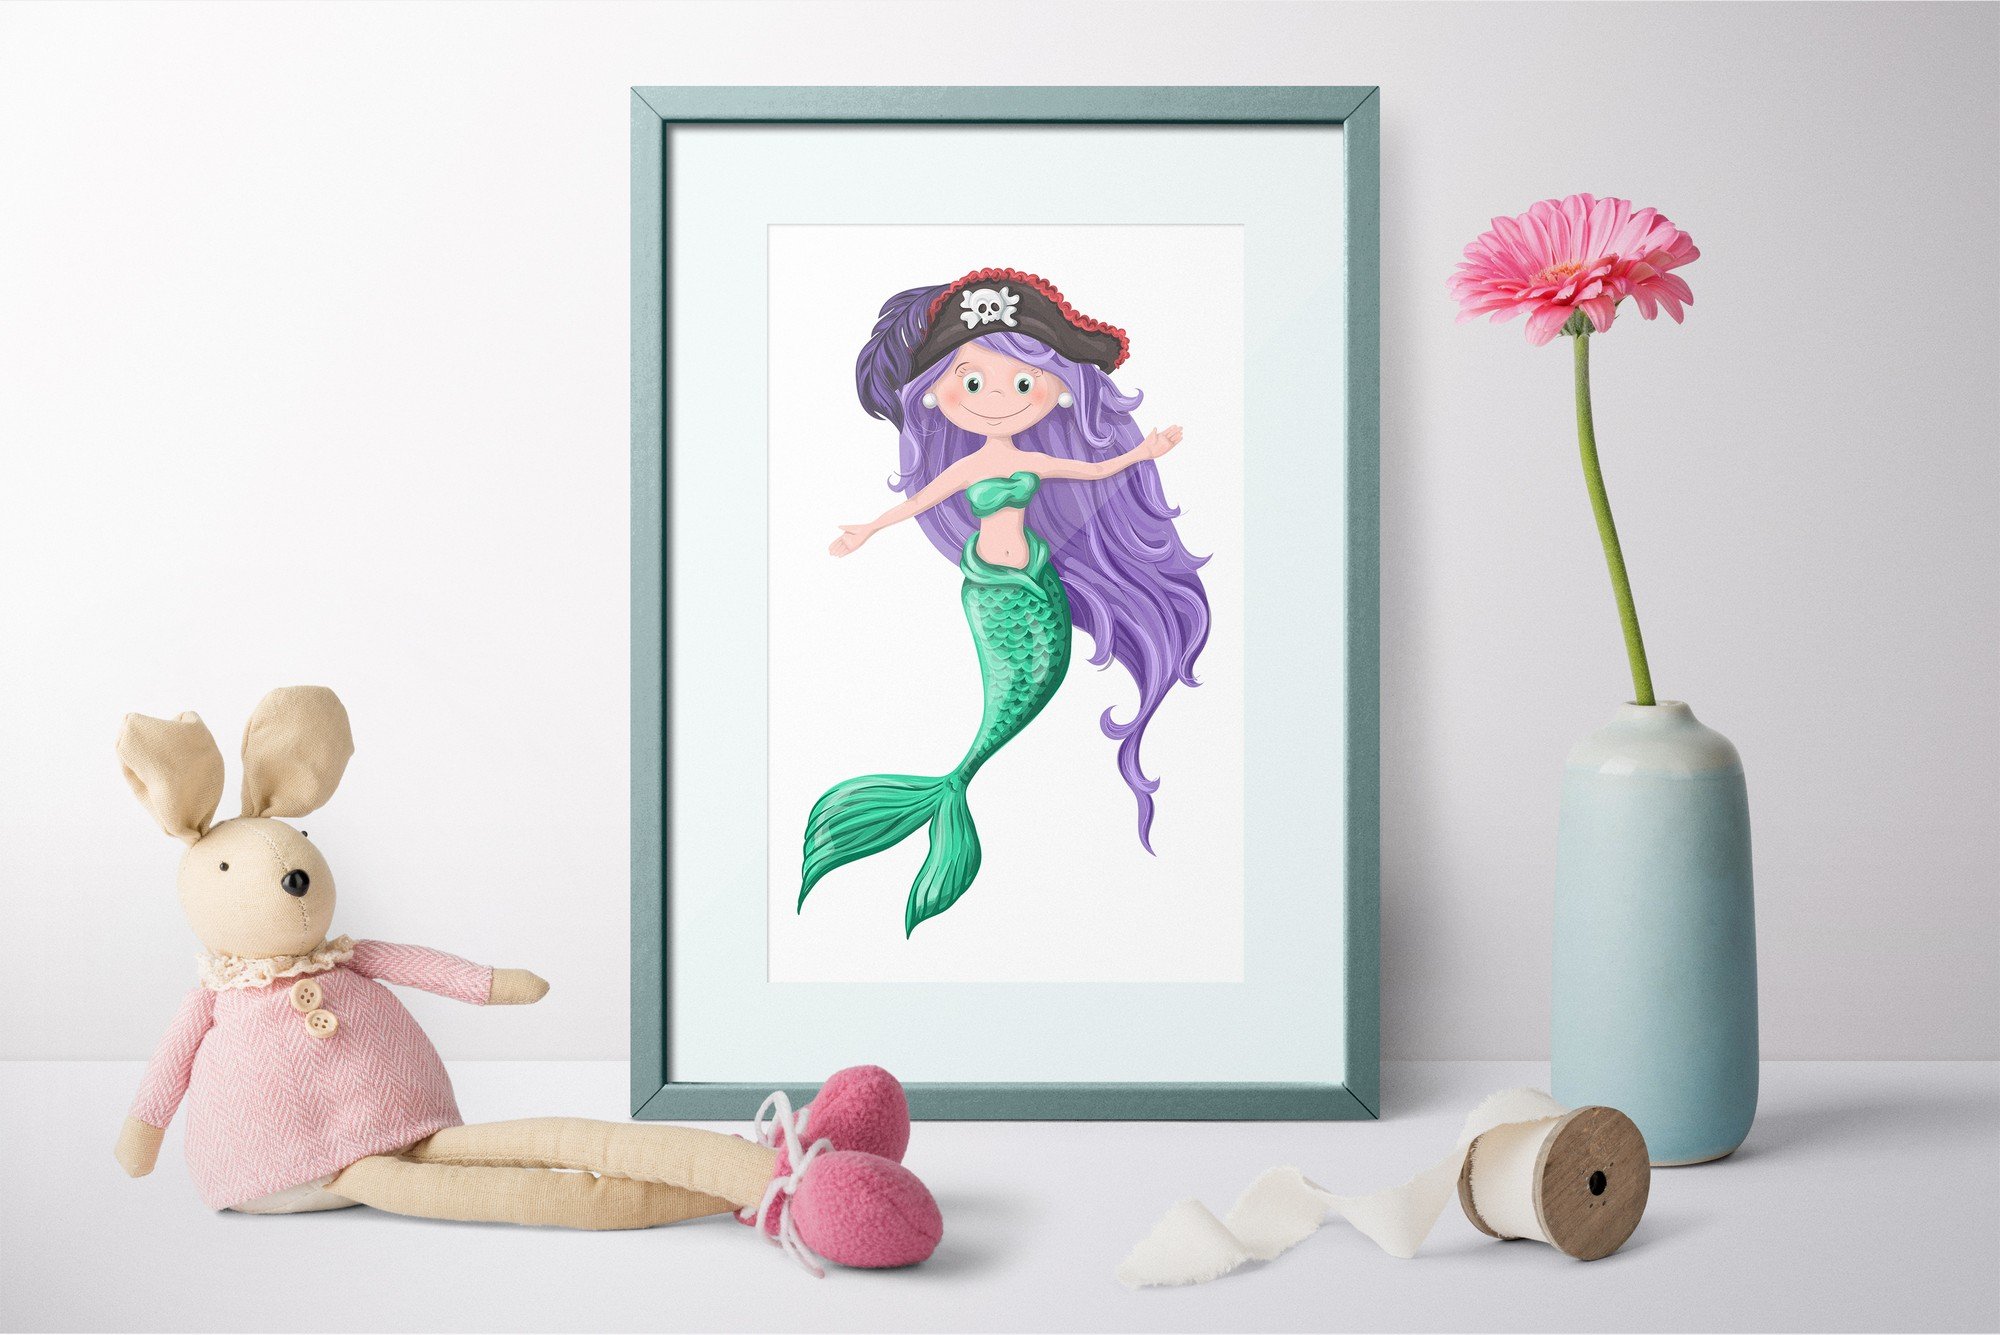 Multicolor mermaid on a minimalistic poster.